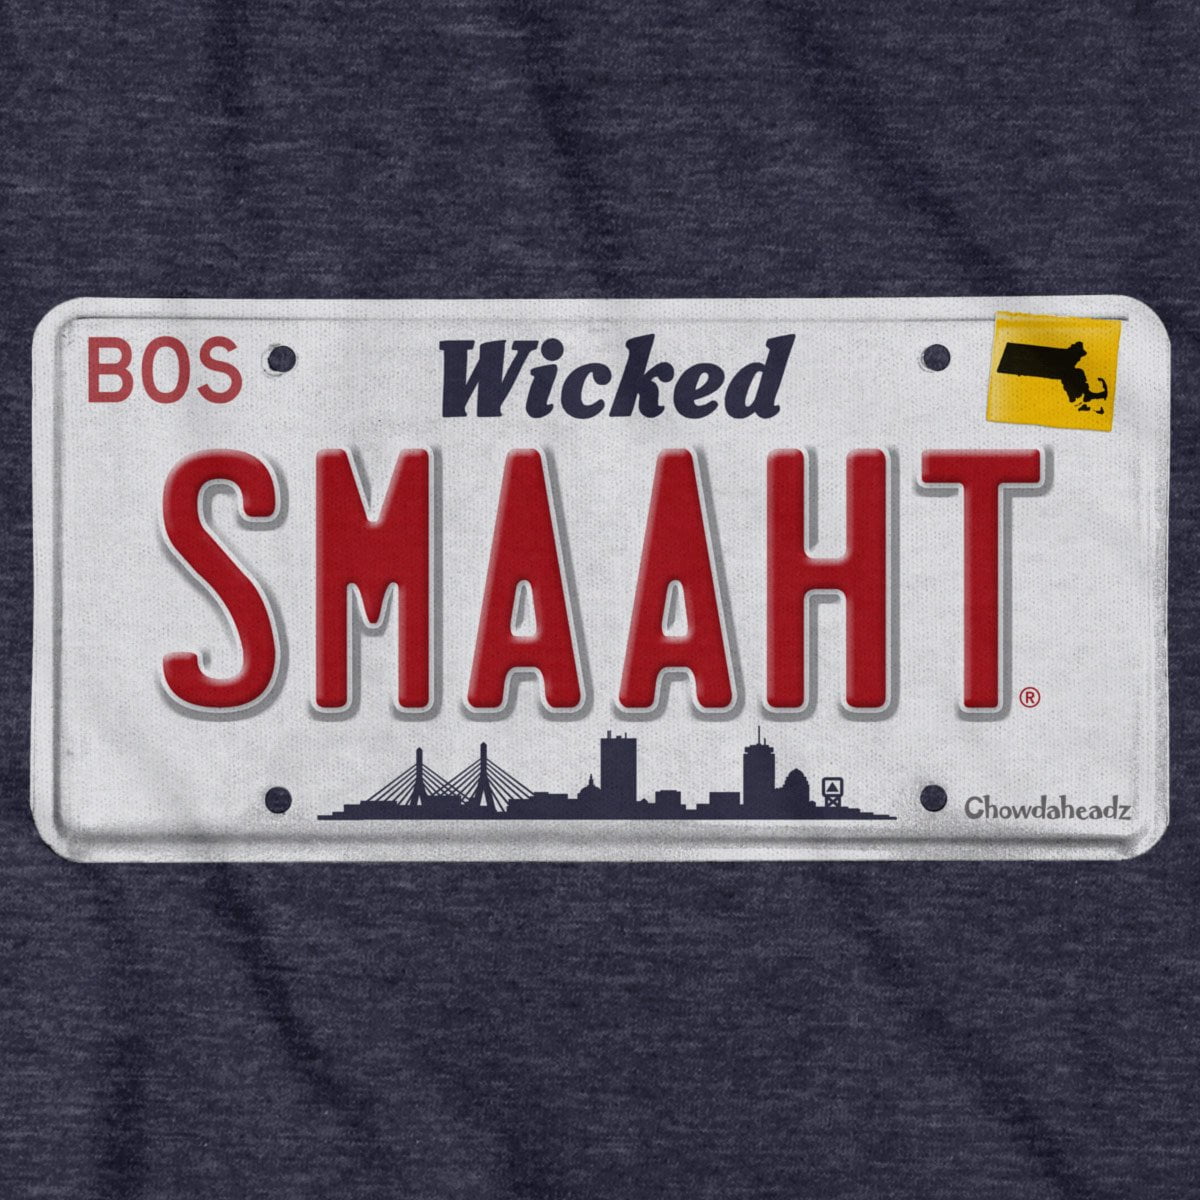 Wicked Smaaht License Plate T-Shirt - Chowdaheadz